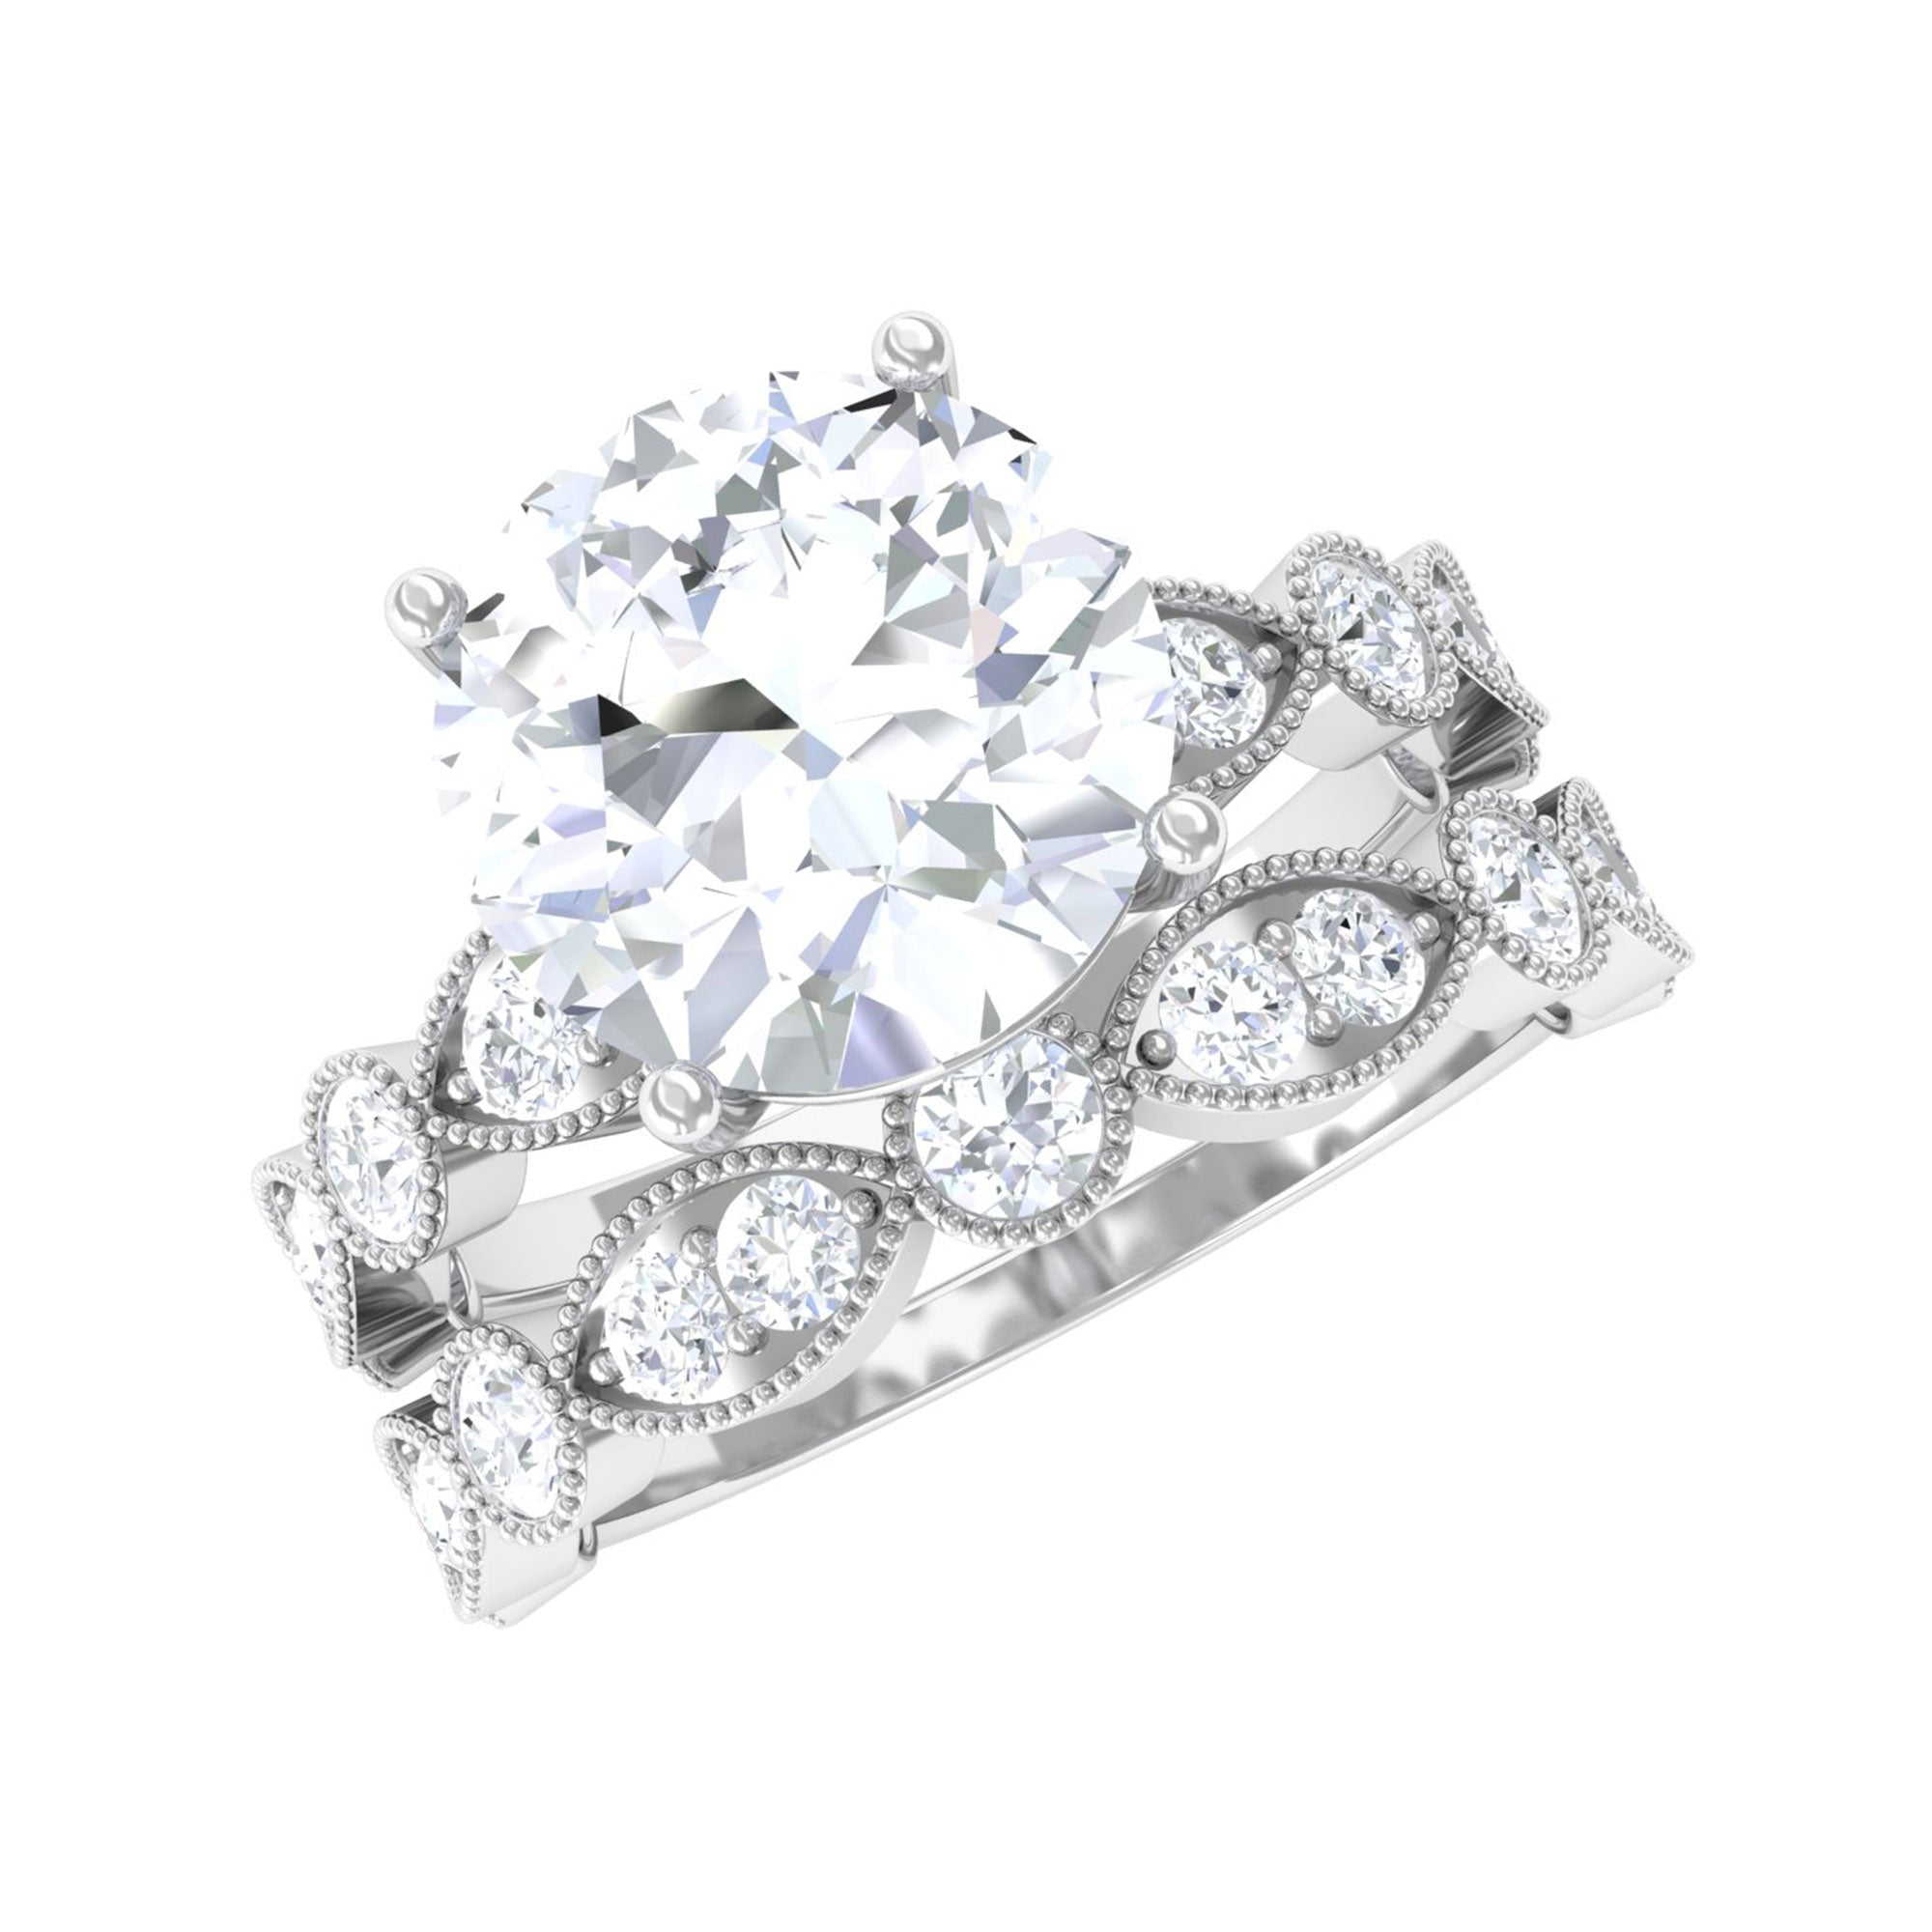 3.50 CT Basket Set Moissanite Solitaire Designer Wedding Ring Set Moissanite - ( D-VS1 ) - Color and Clarity - Rosec Jewels